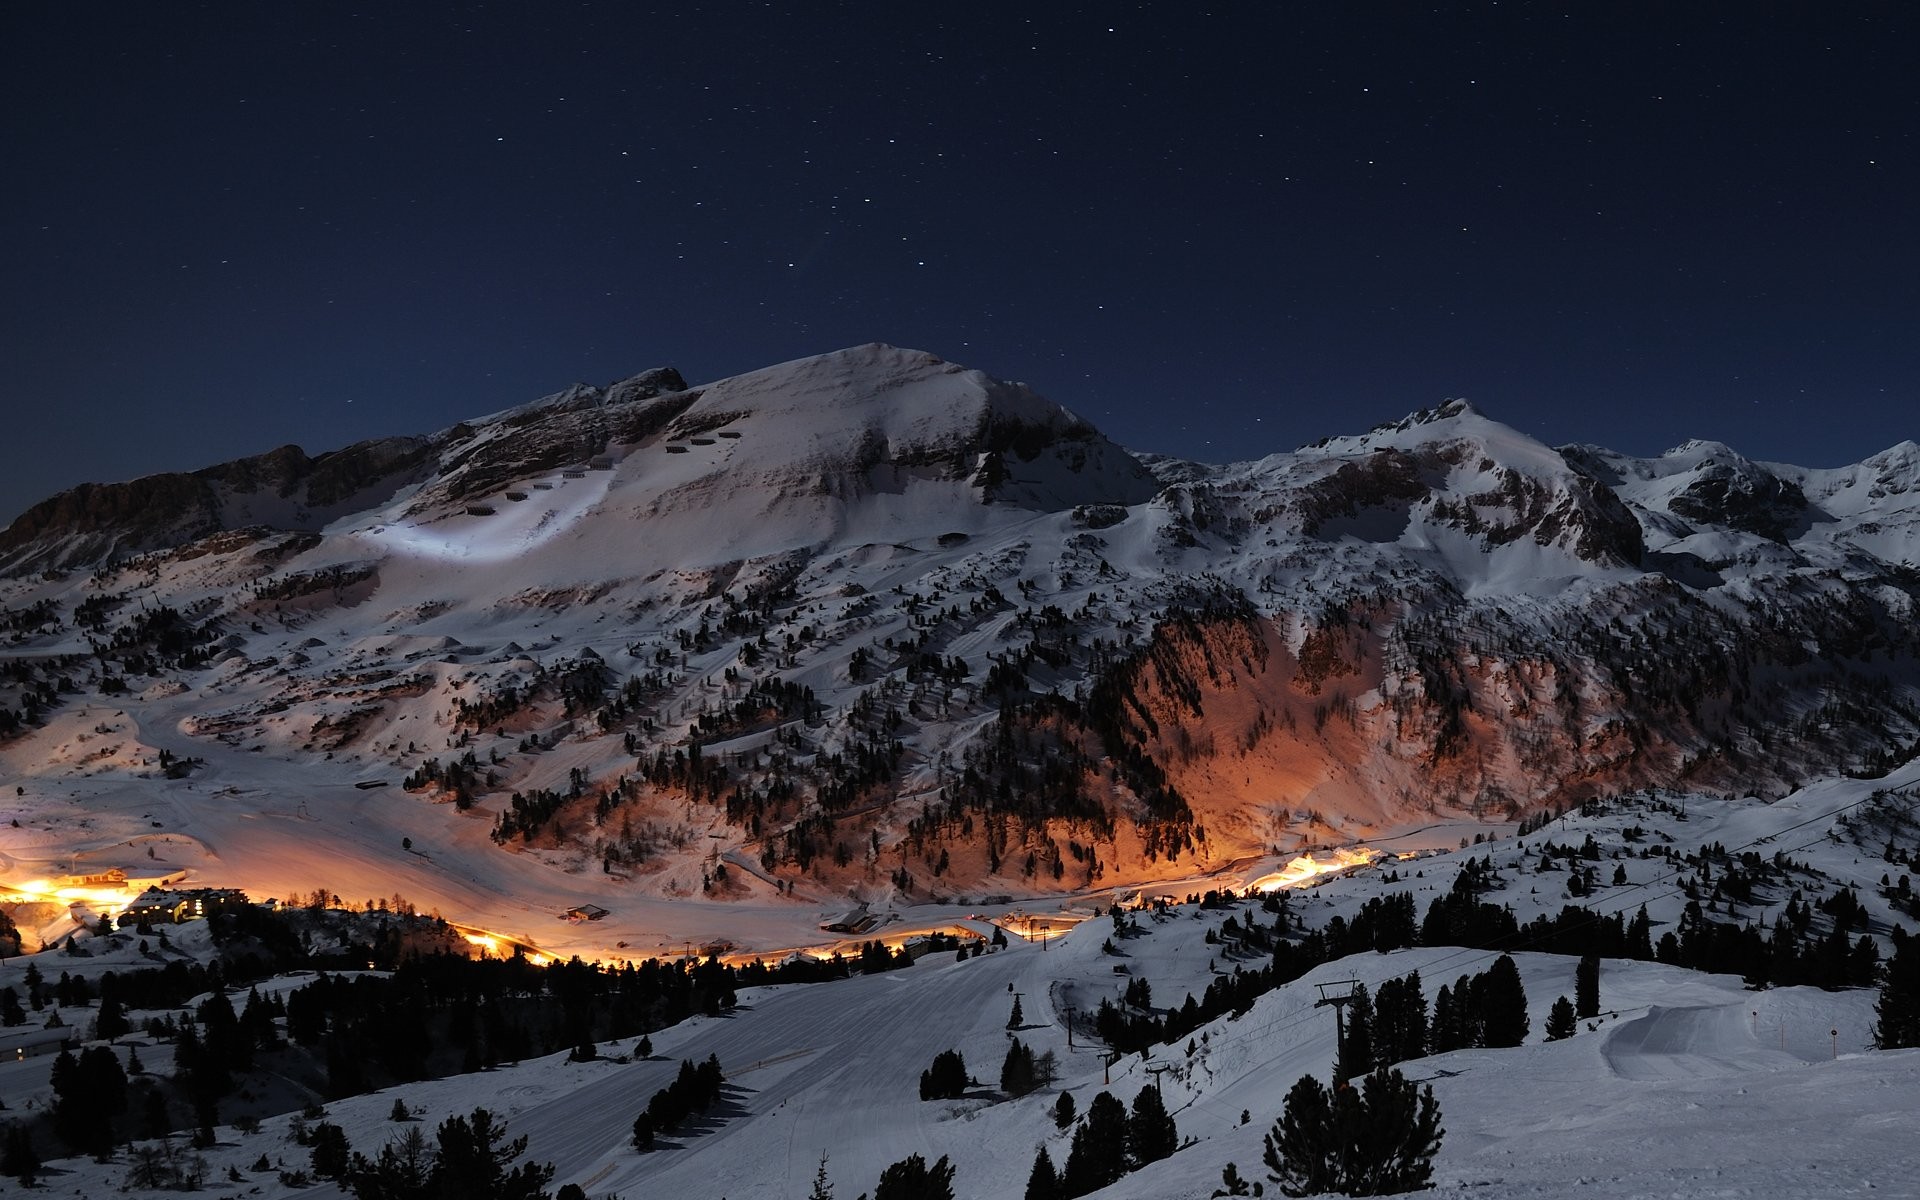 valleys-mountains-snow-display-night-windows-desktop-images-long-exposure-free-images-view-views.jpg